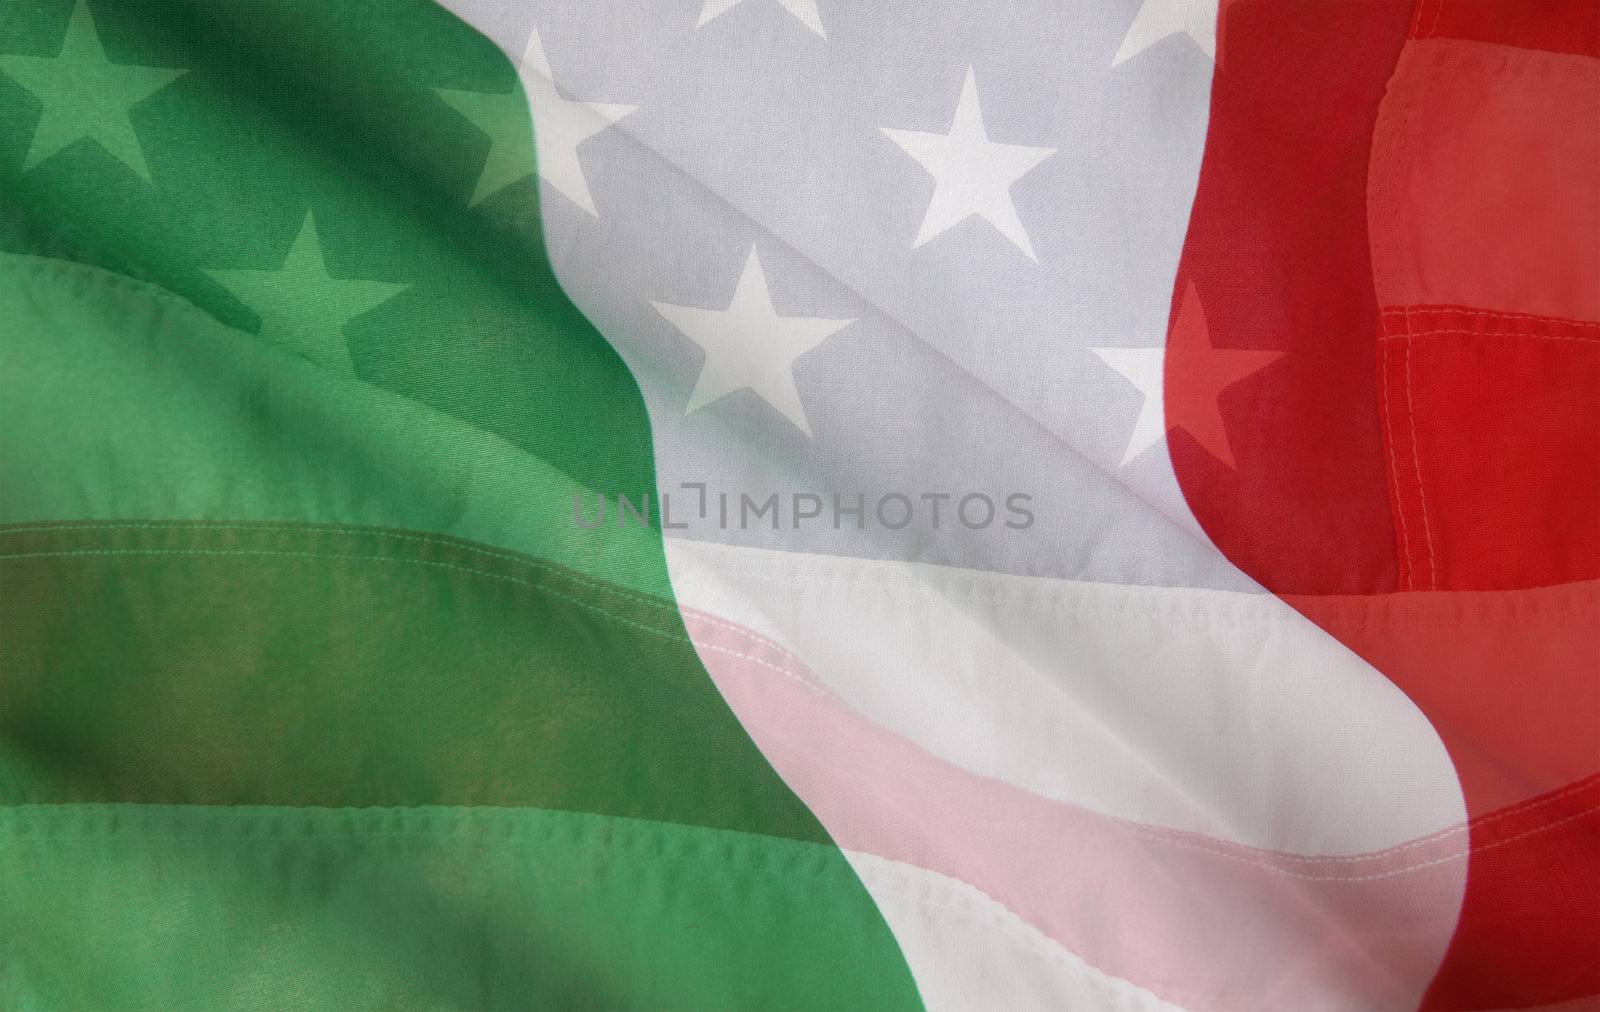 Italian and USA flags by nebari